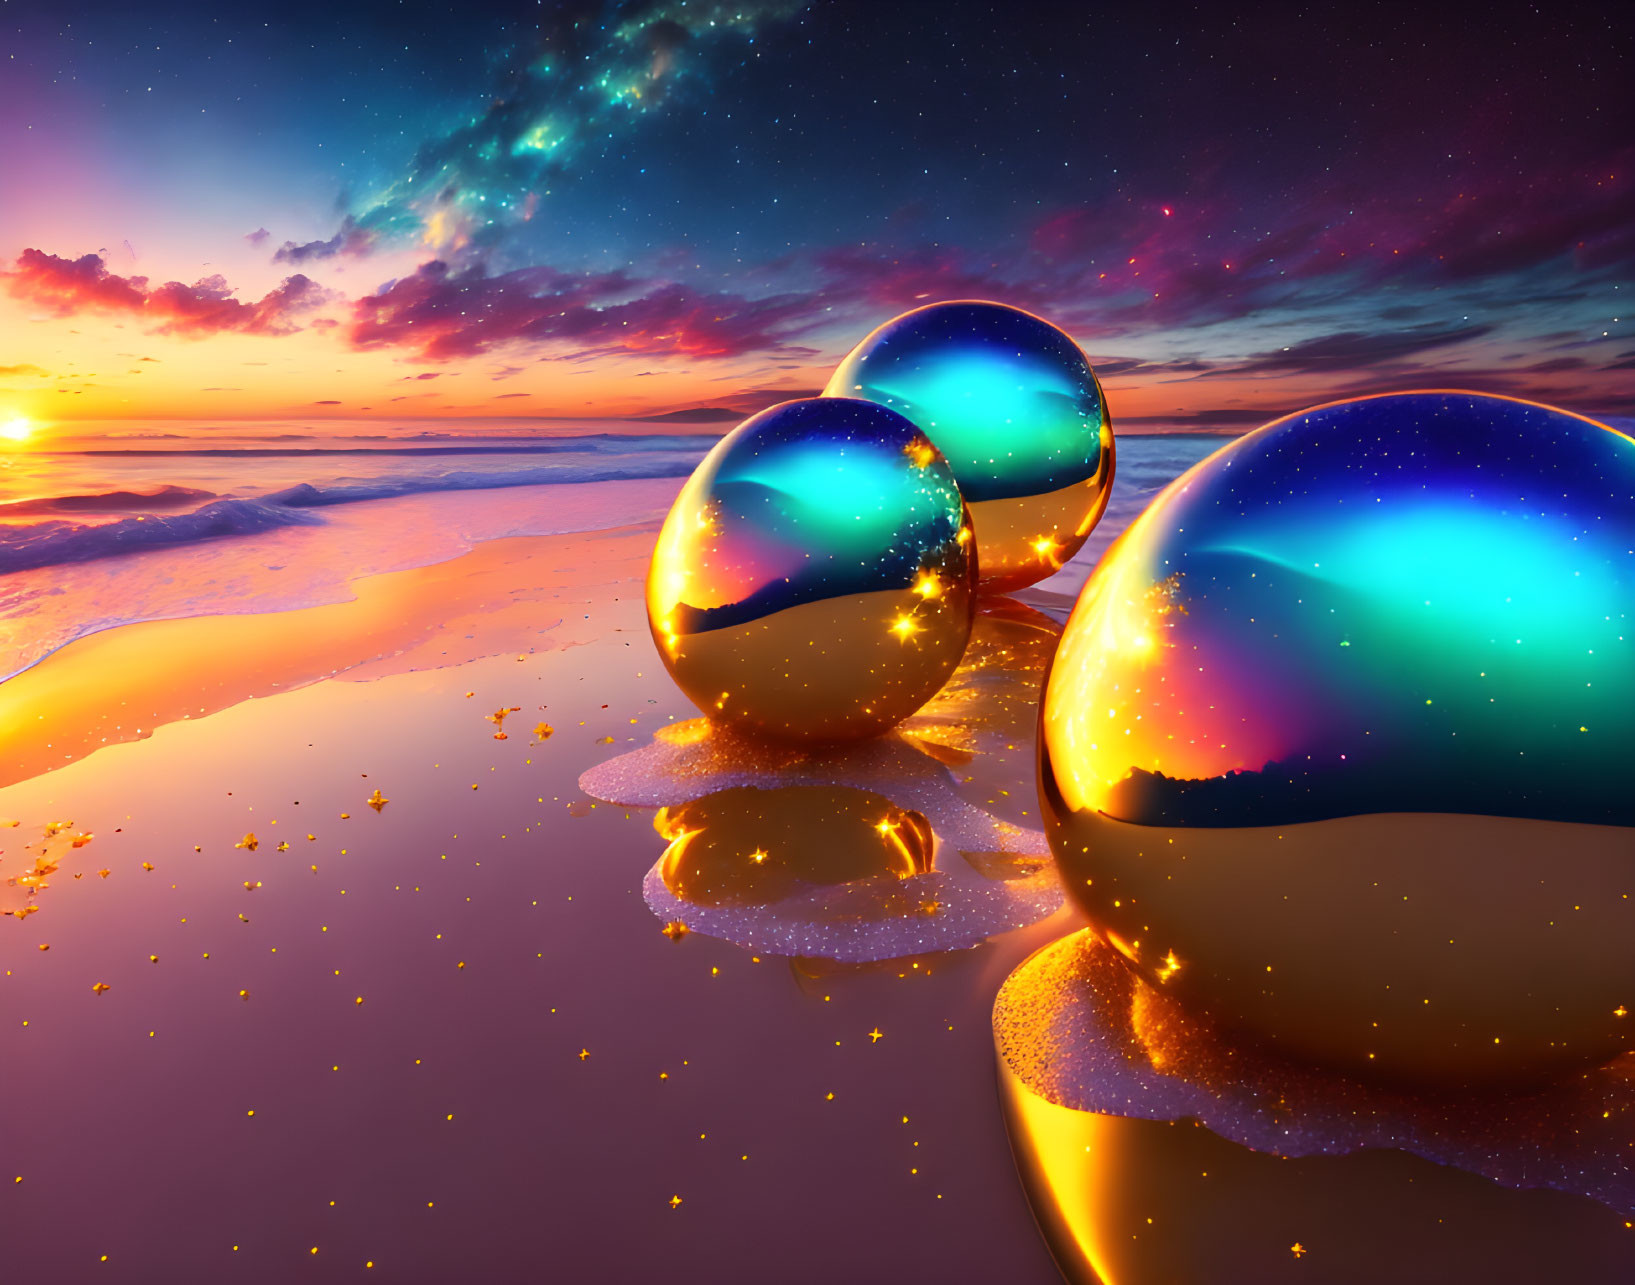 3 universes on a beach